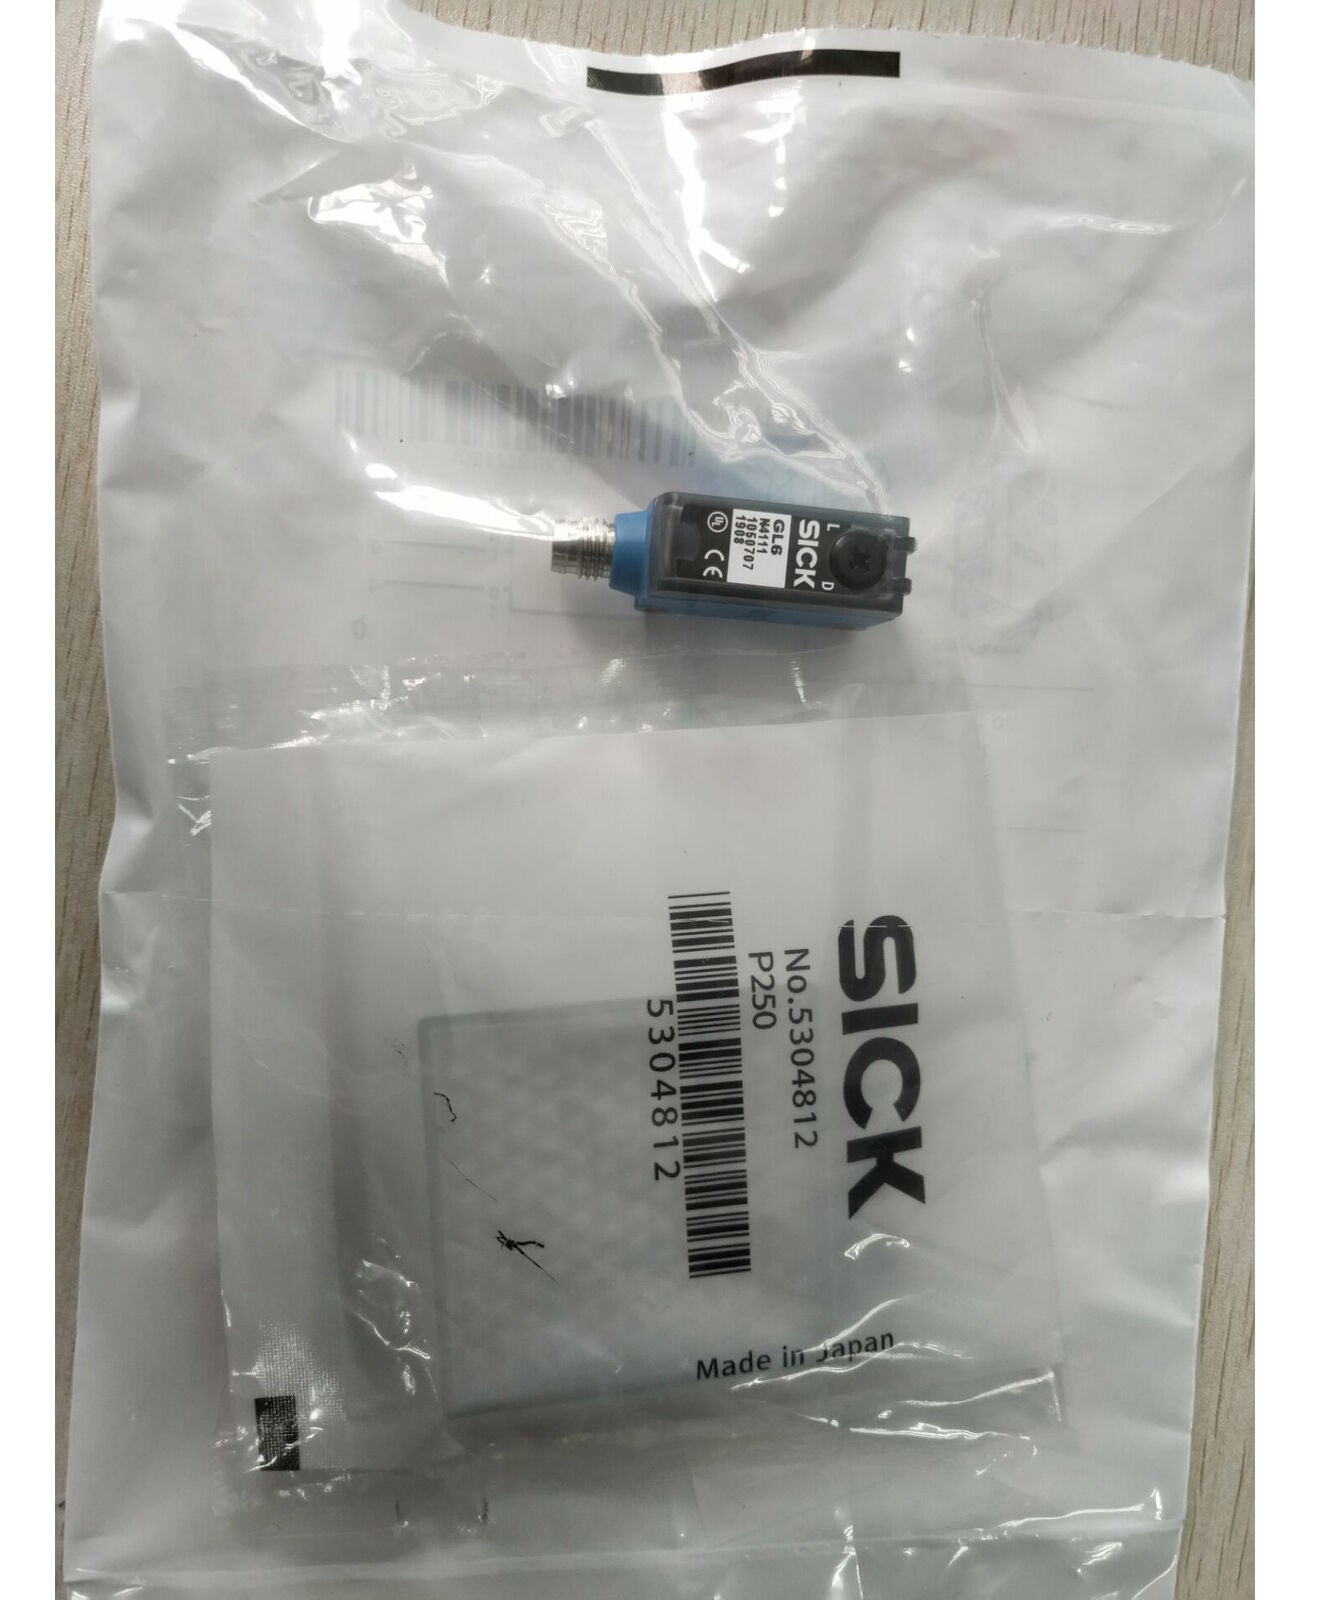 new 1PC  SICK GL6-N4112 1051778 Photoelectric switch sensor